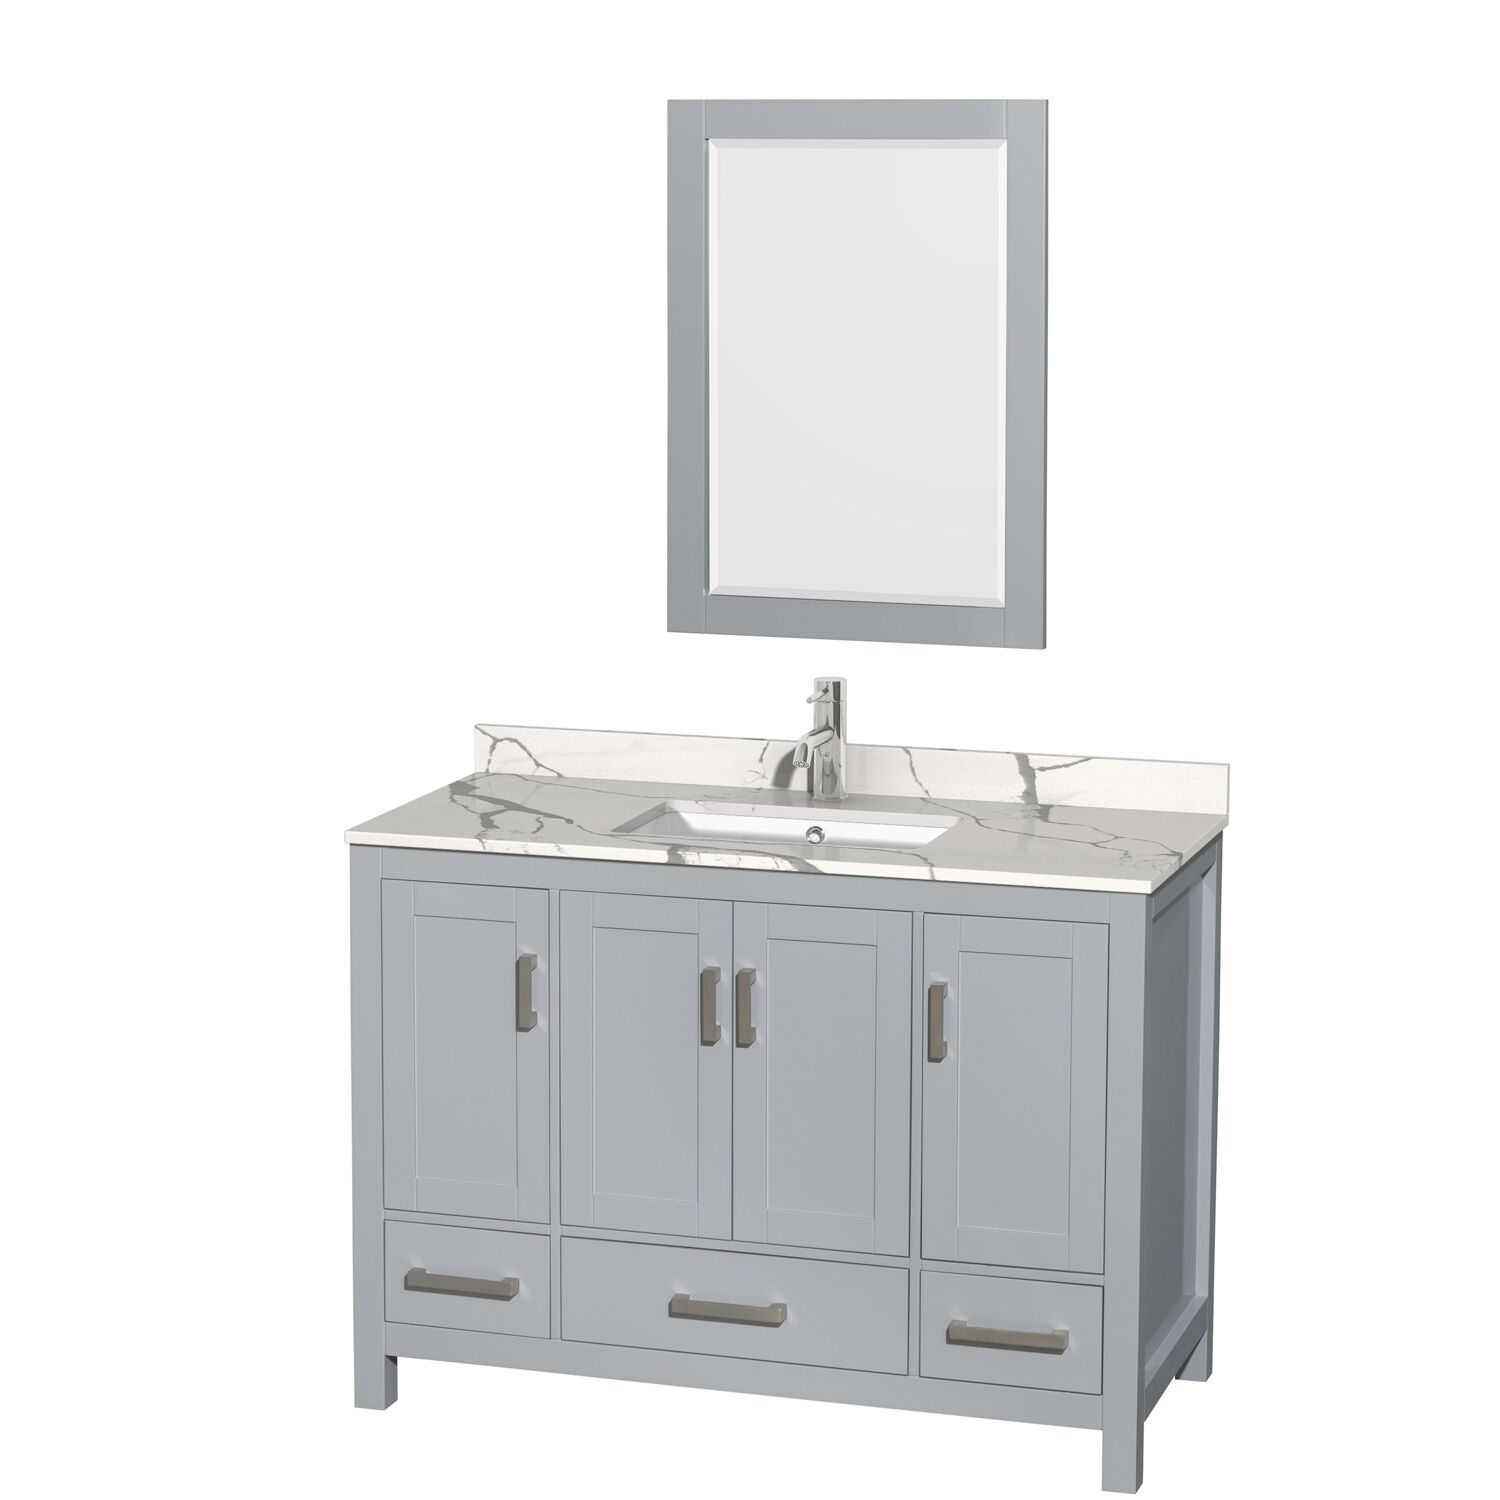 48" Single Bathroom Vanity with Color, Countertop and Mirror Options